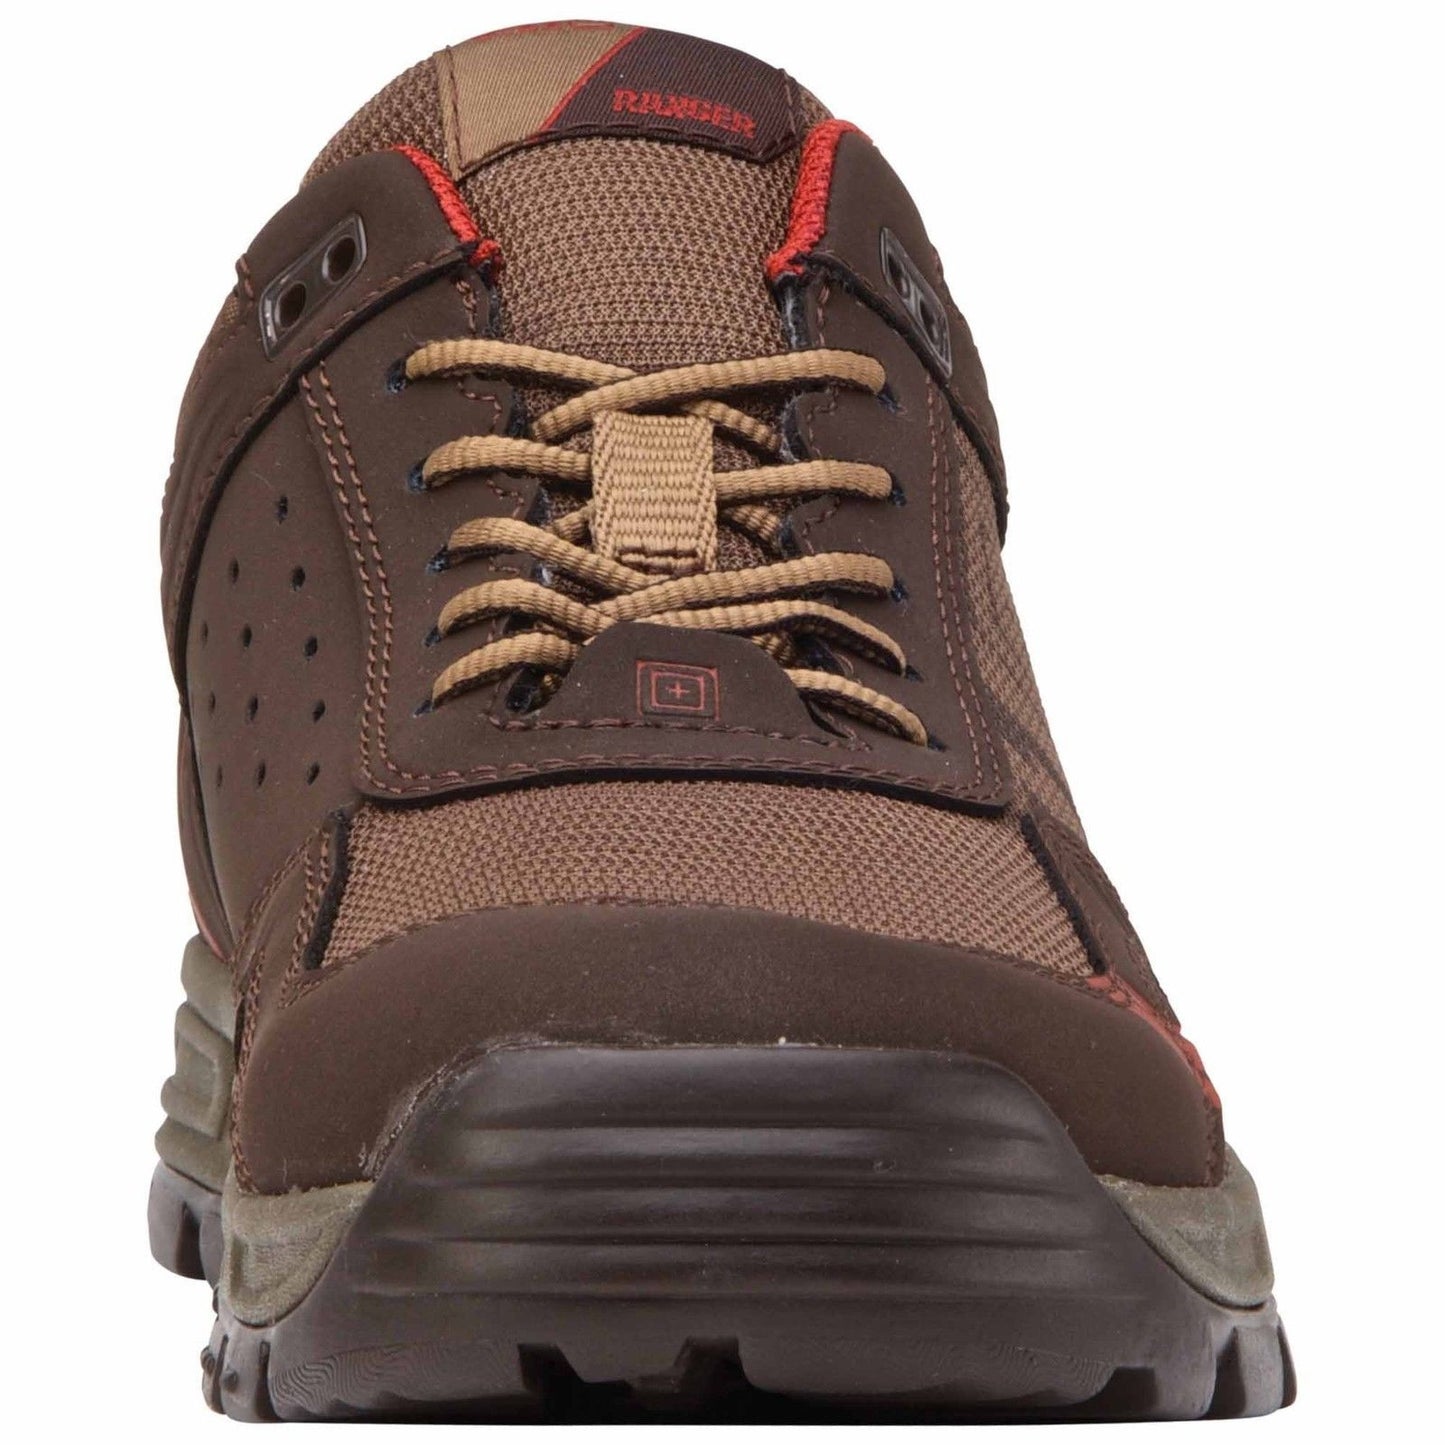 5.11 Versatile All Terrain Ranger Shoes - Mens Low Top OrthoLite® Tactical Boots